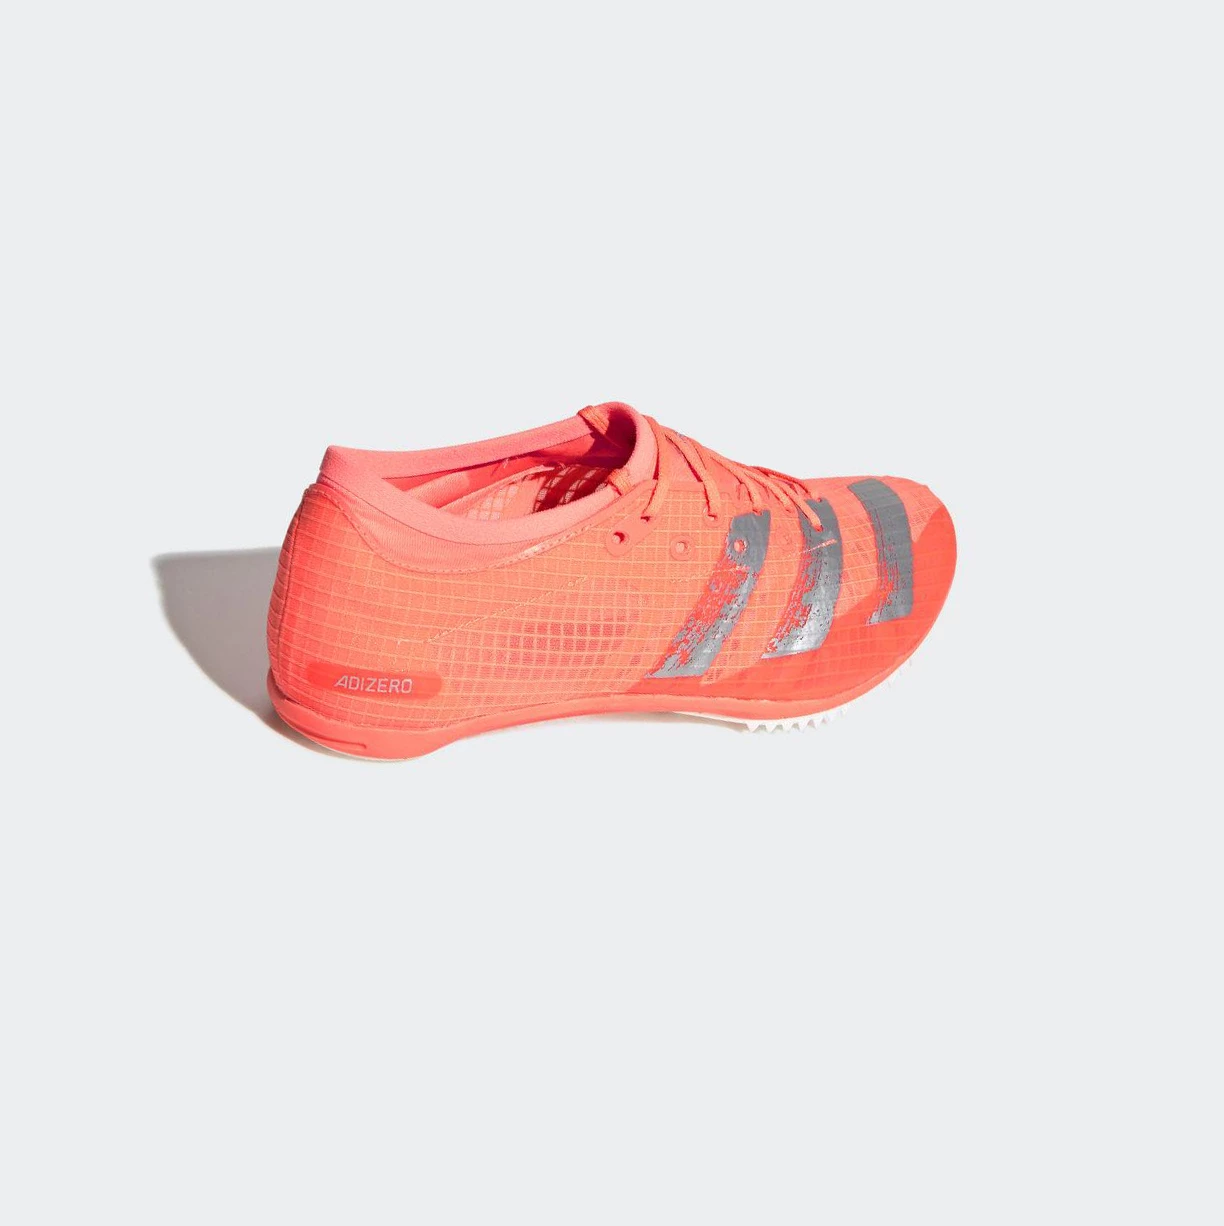 Track Spikes Adidas Adizero Ambition Panske Oranžové | 752SKGDRFIX